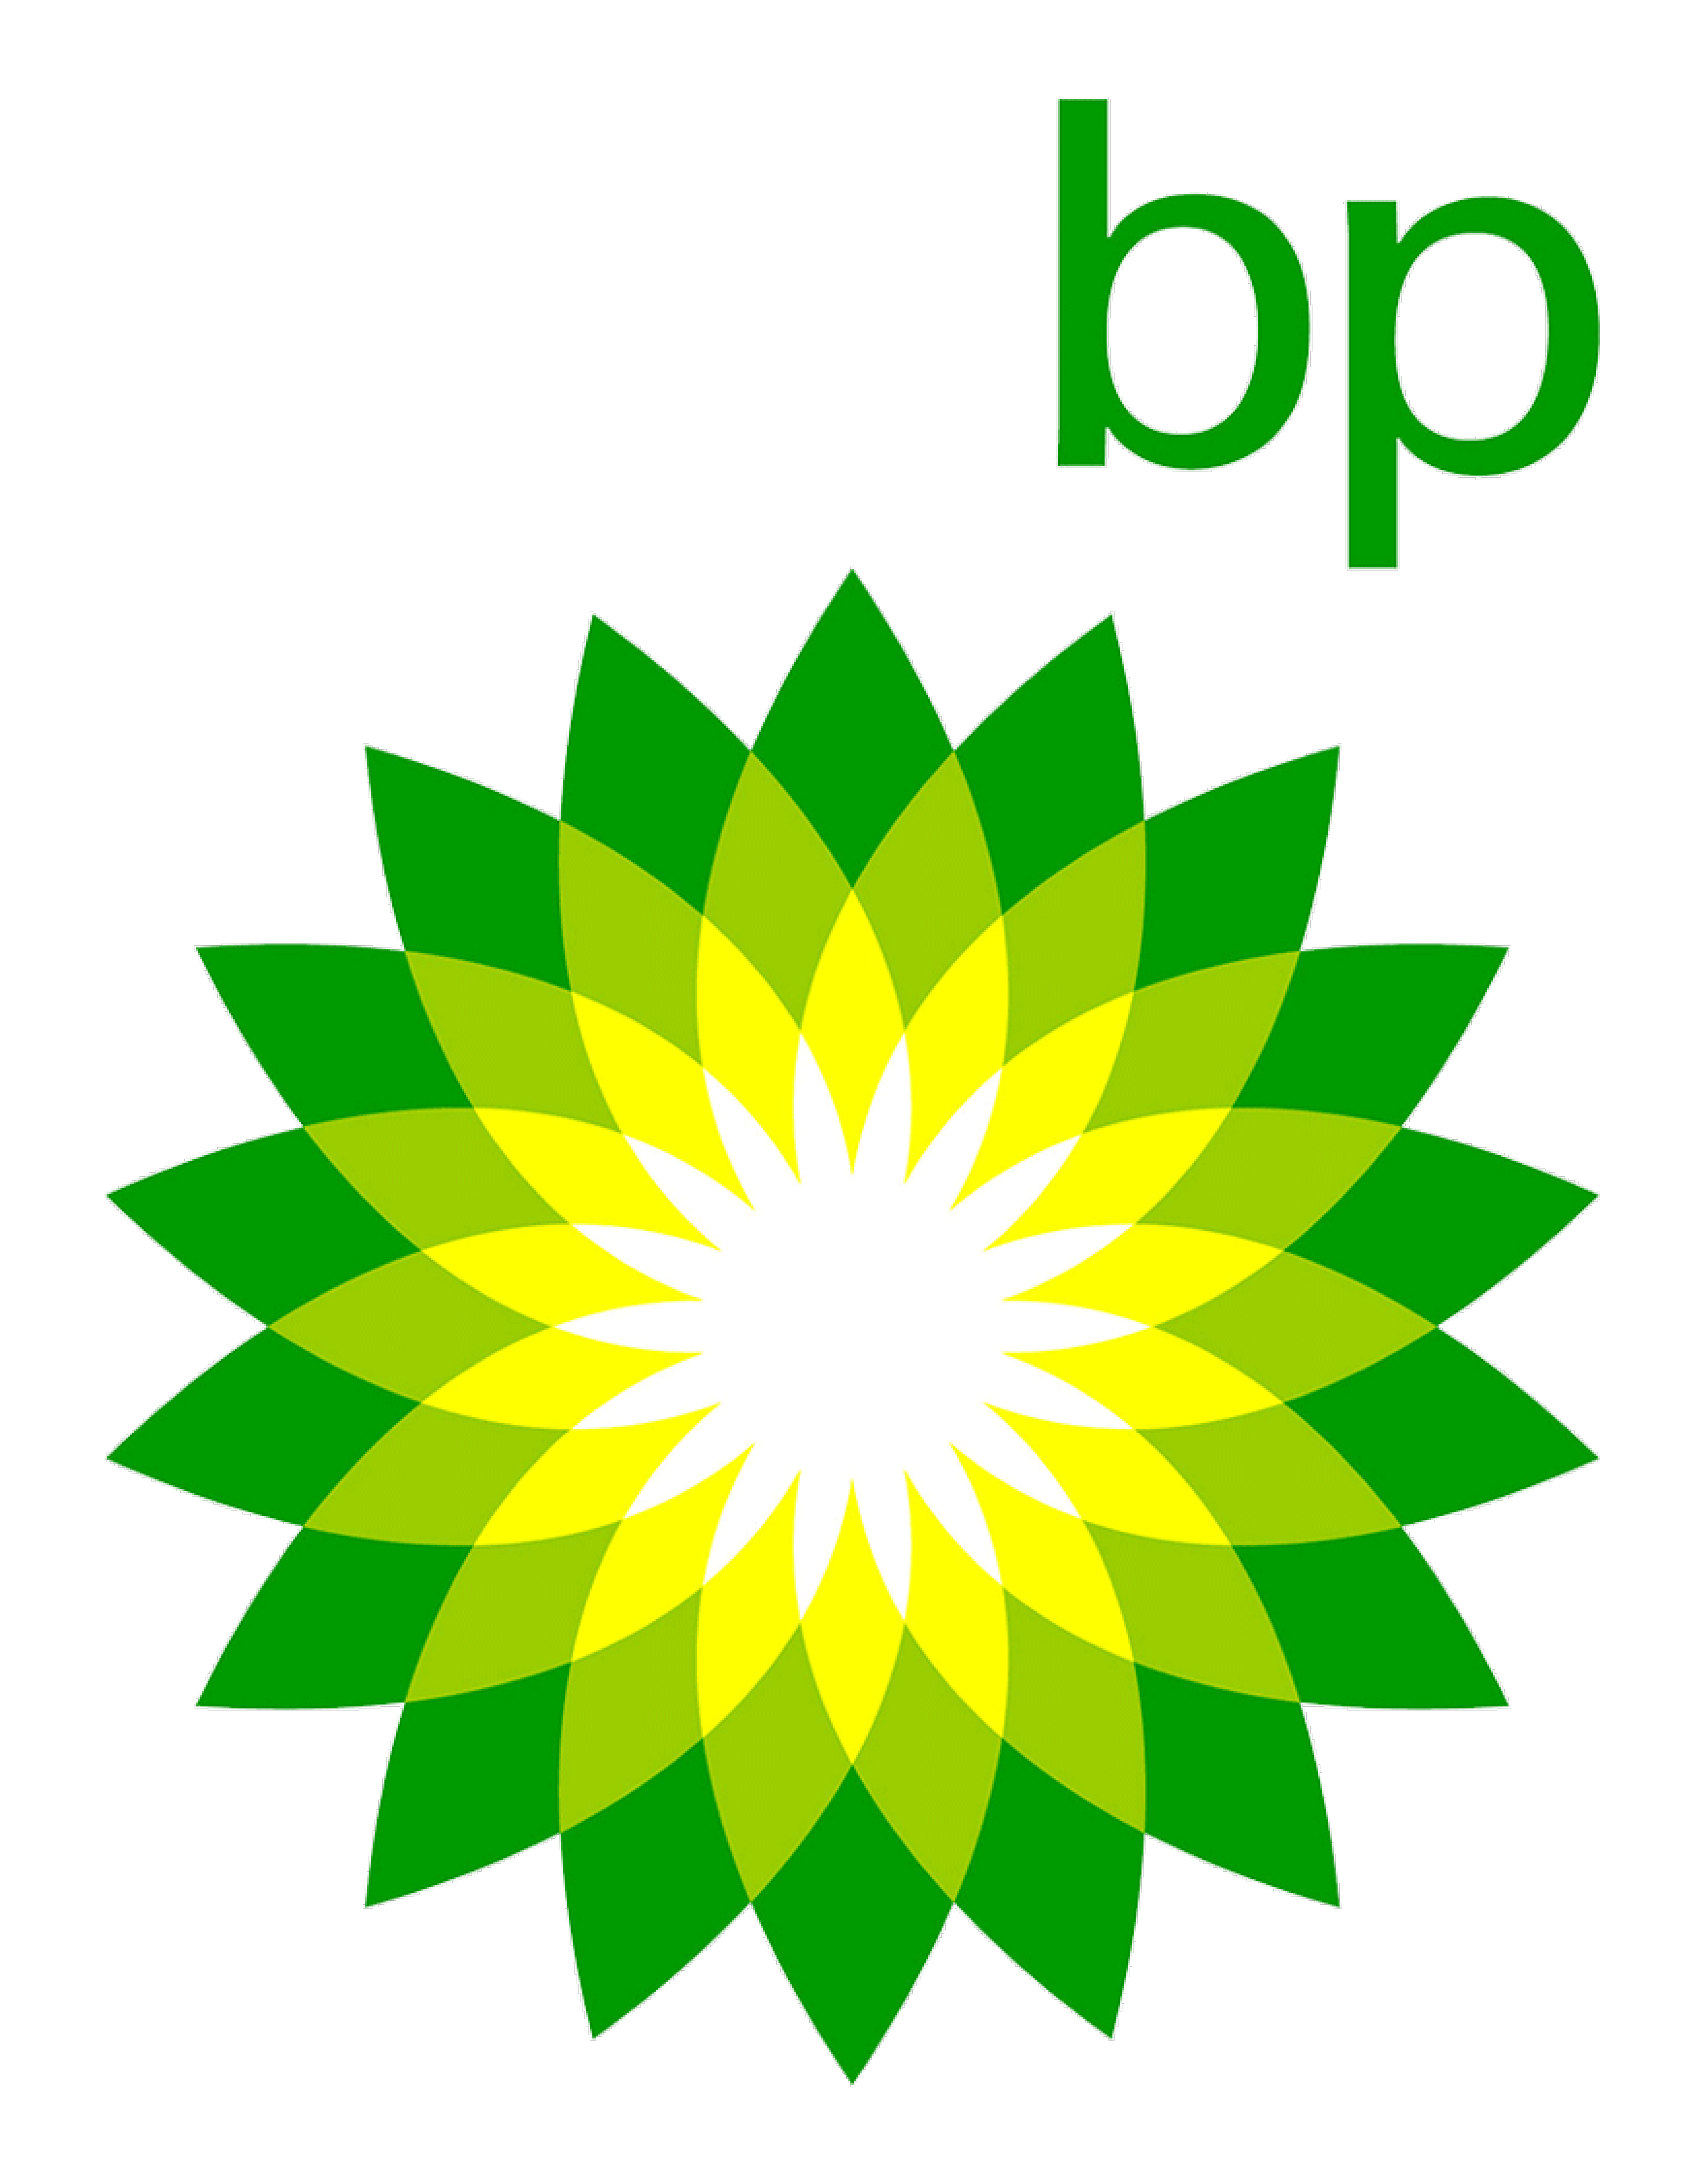 The BP brand.